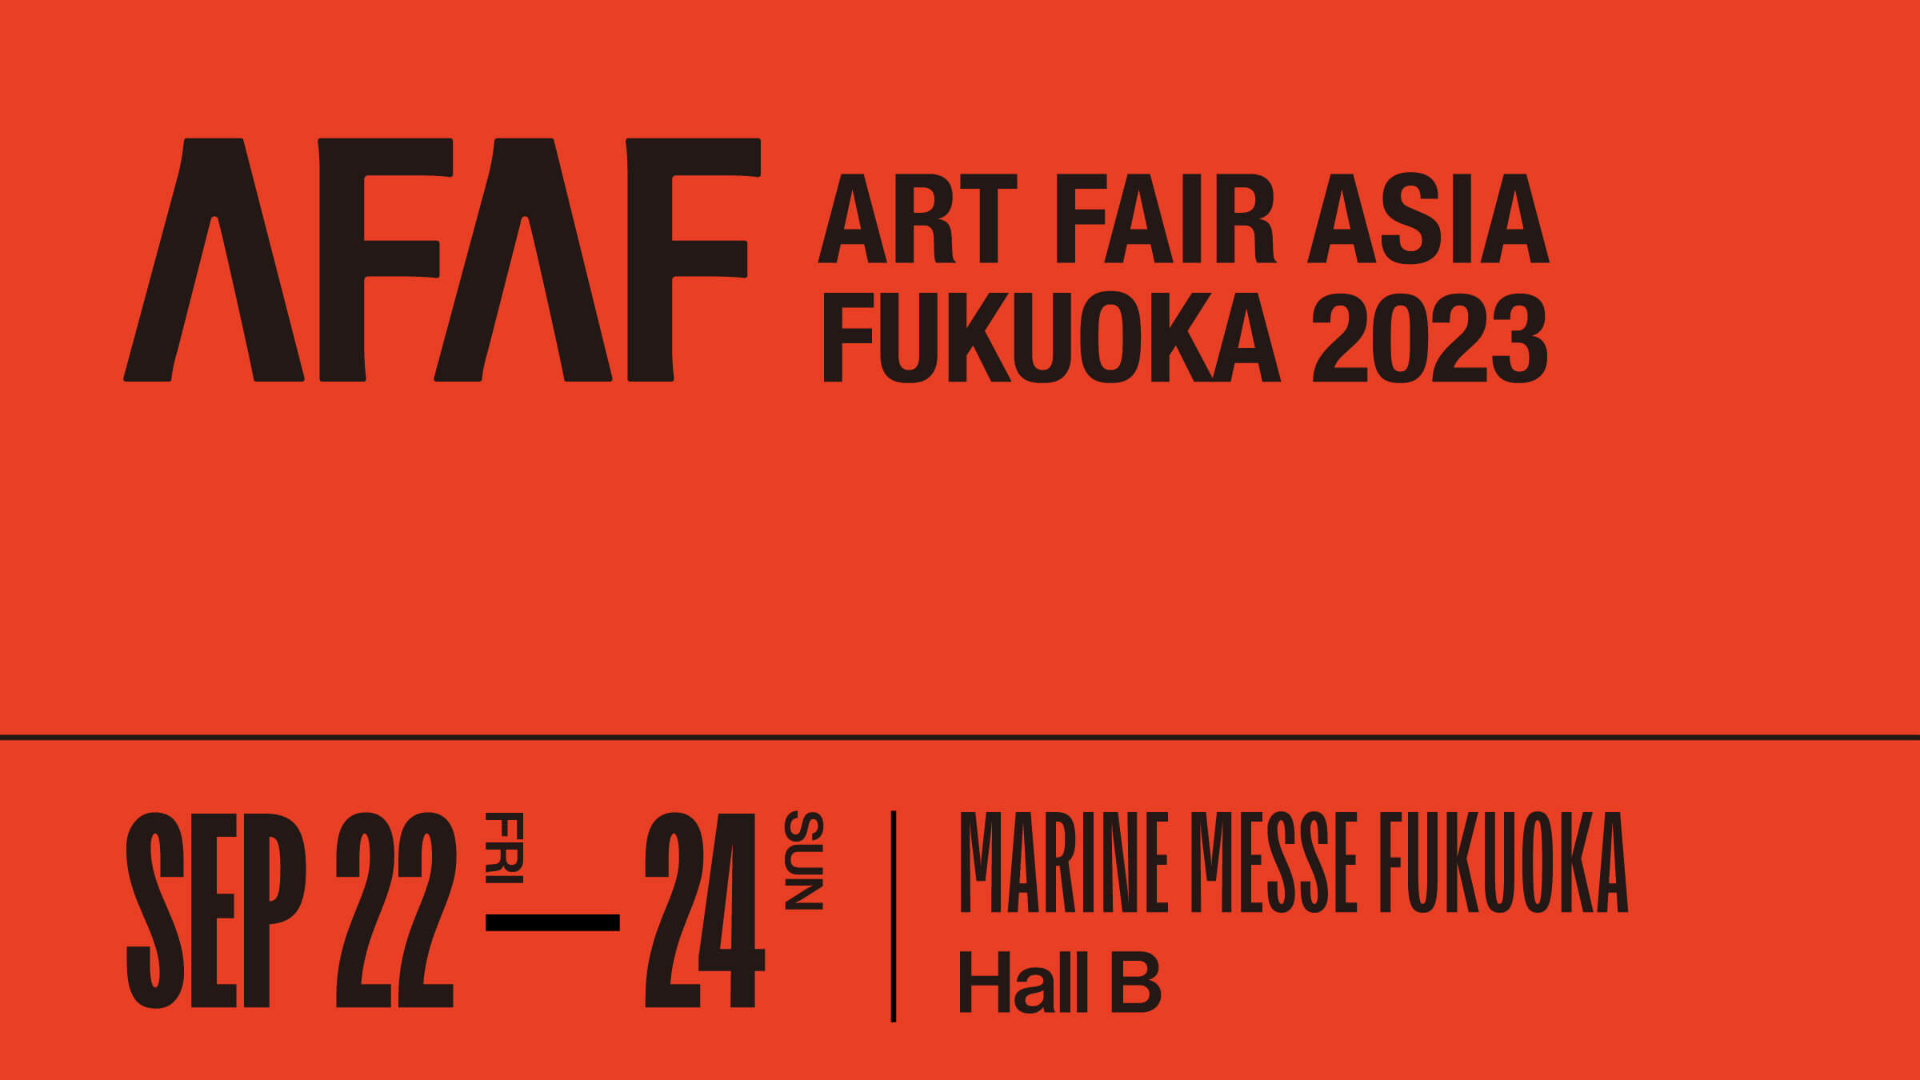 ART FAIR ASIA FUKUOKA 2023